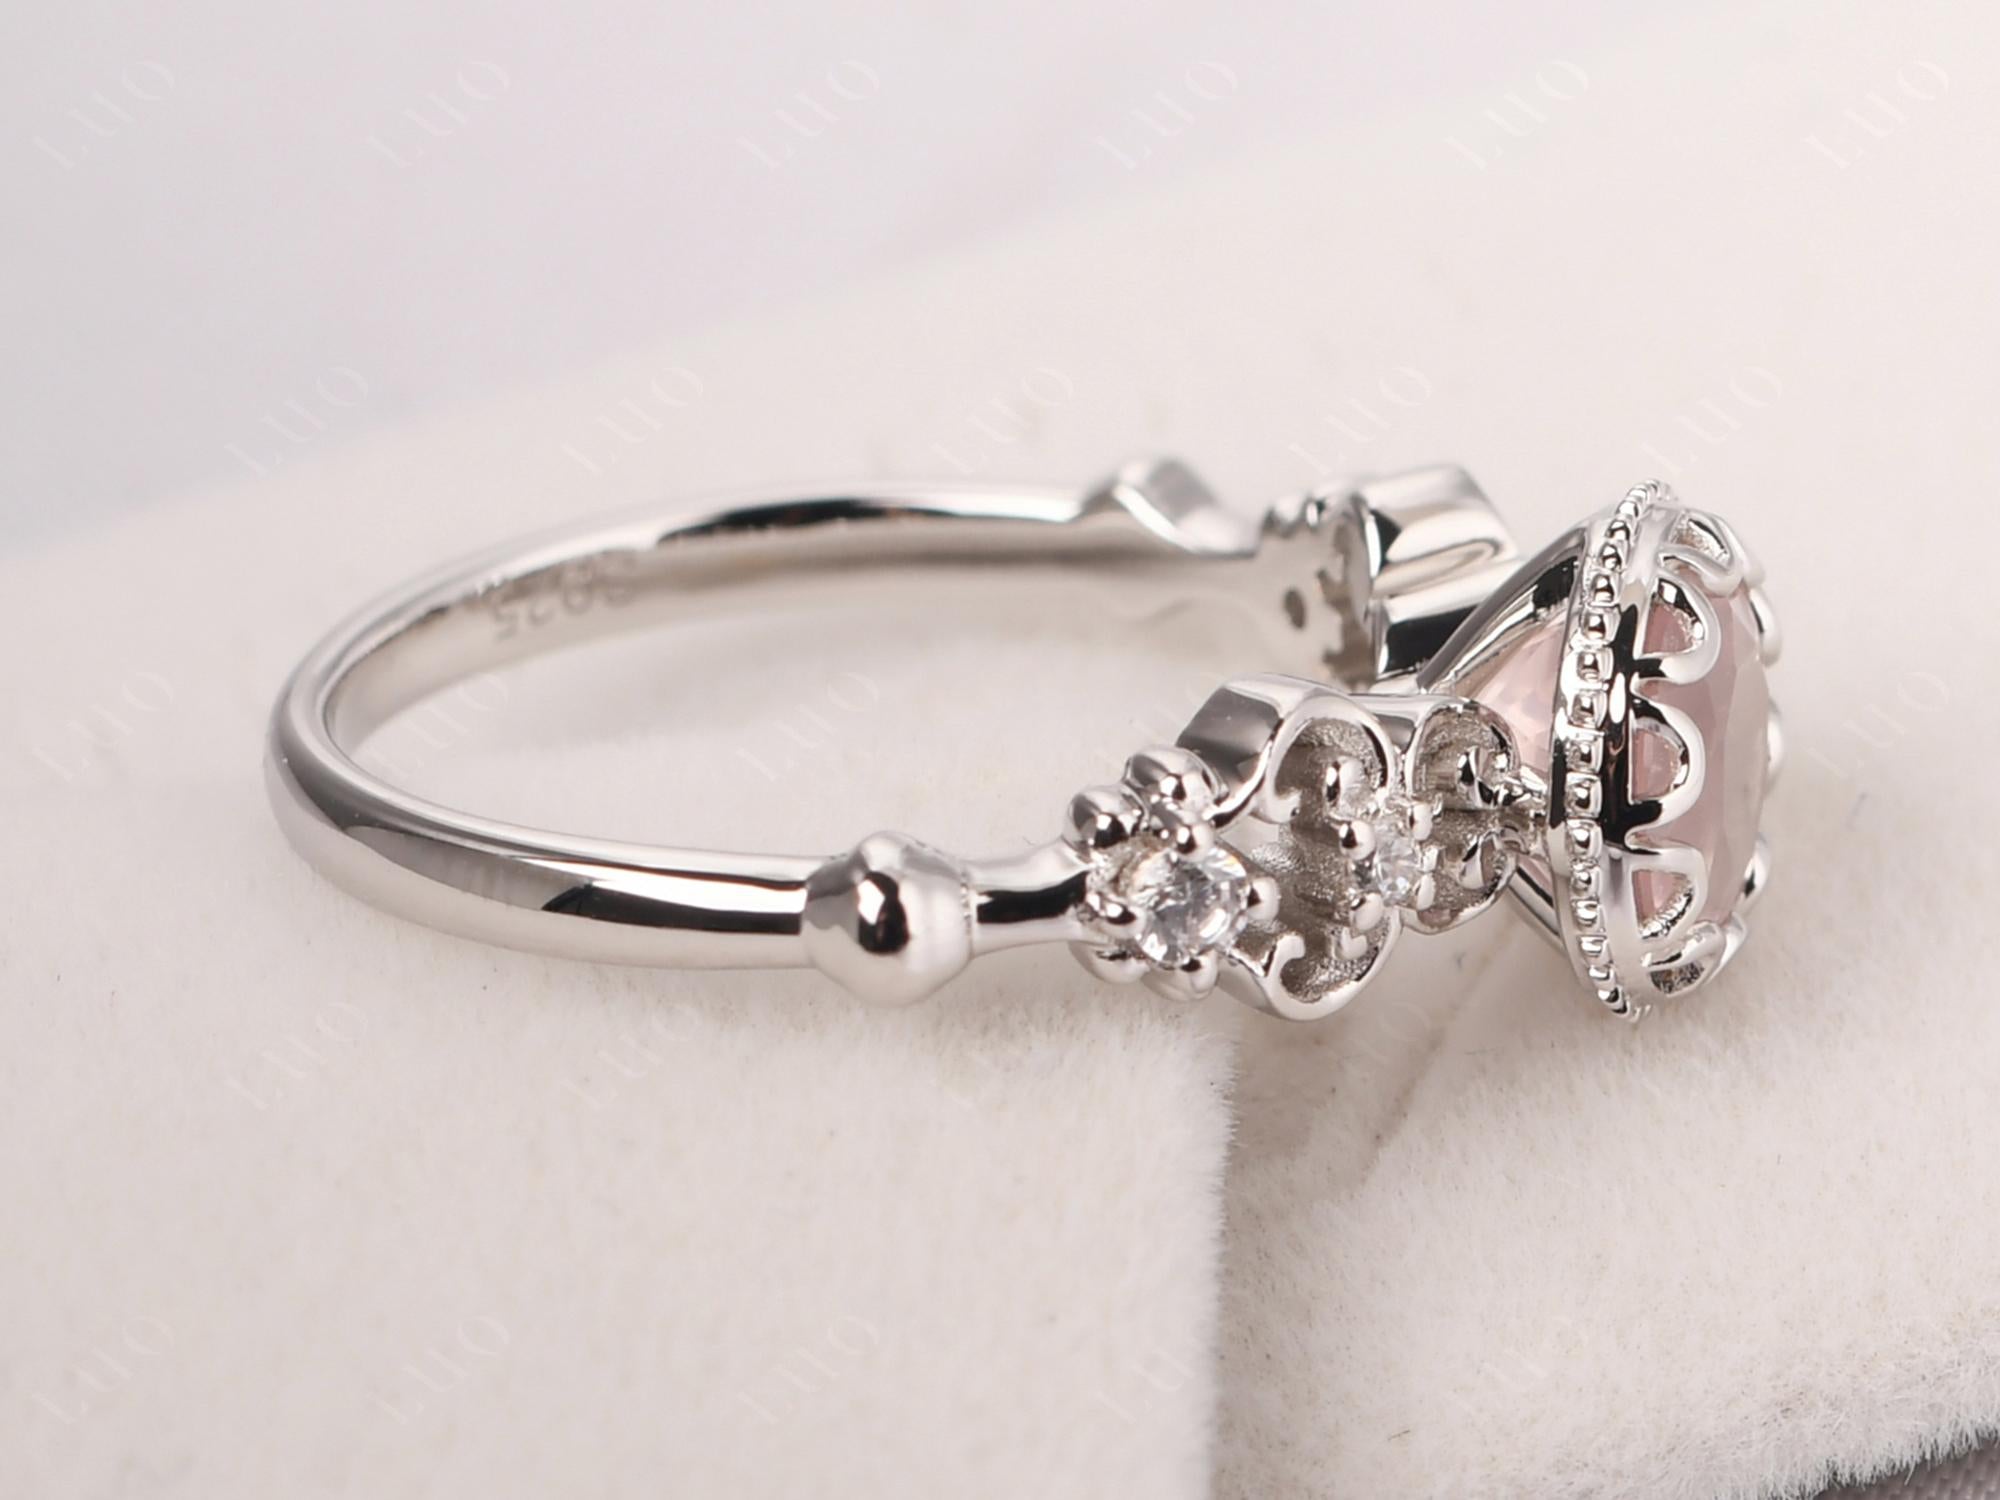 Art Deco Vintage Inspired Rose Quartz Ring - LUO Jewelry